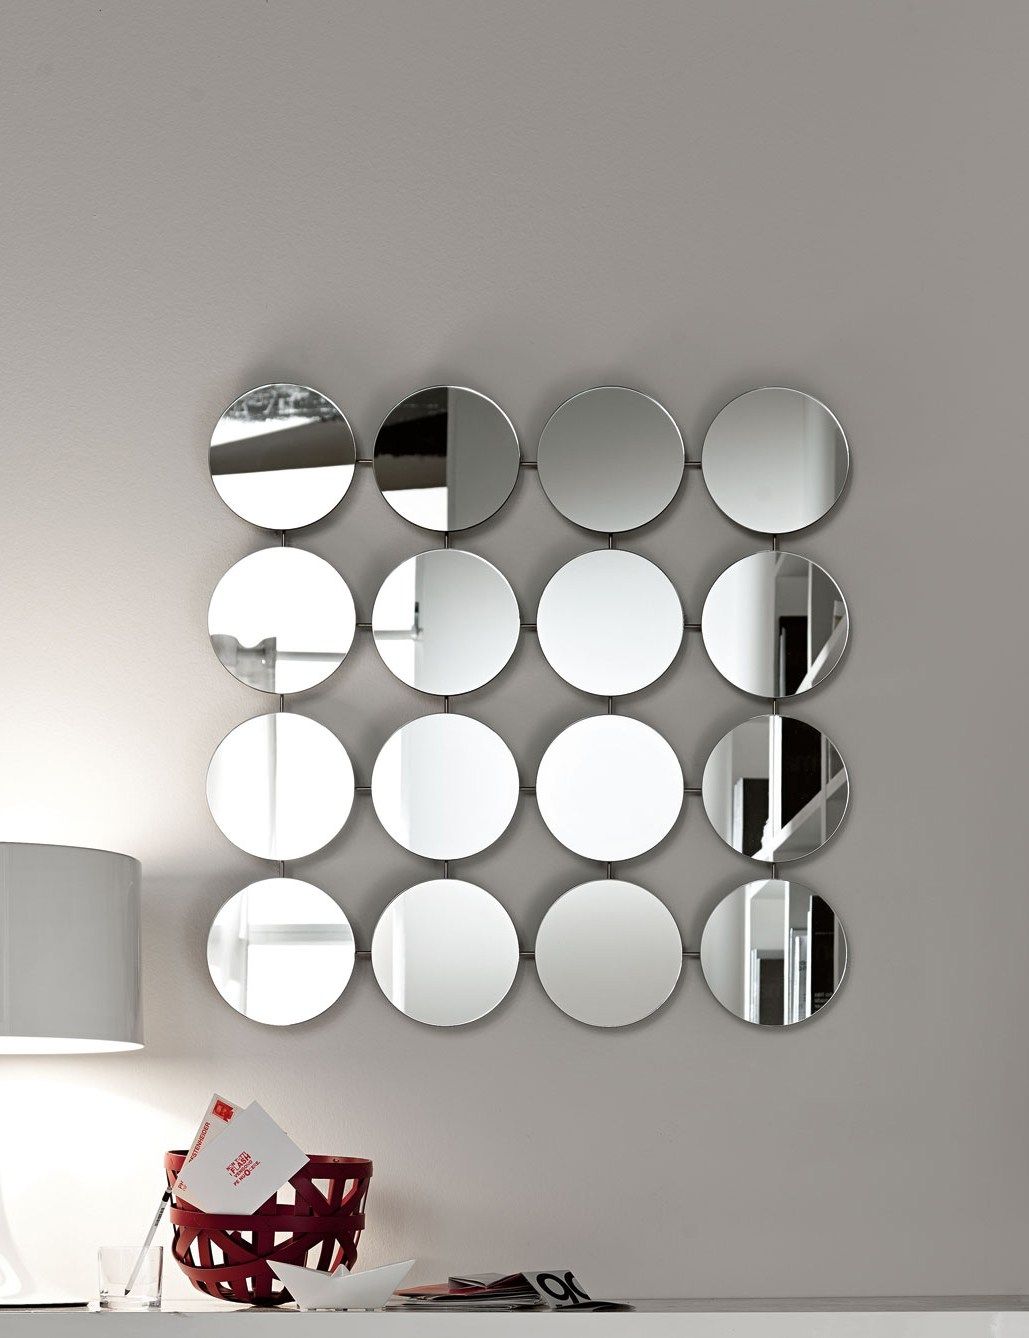 16 Balls Decorative Mirrors